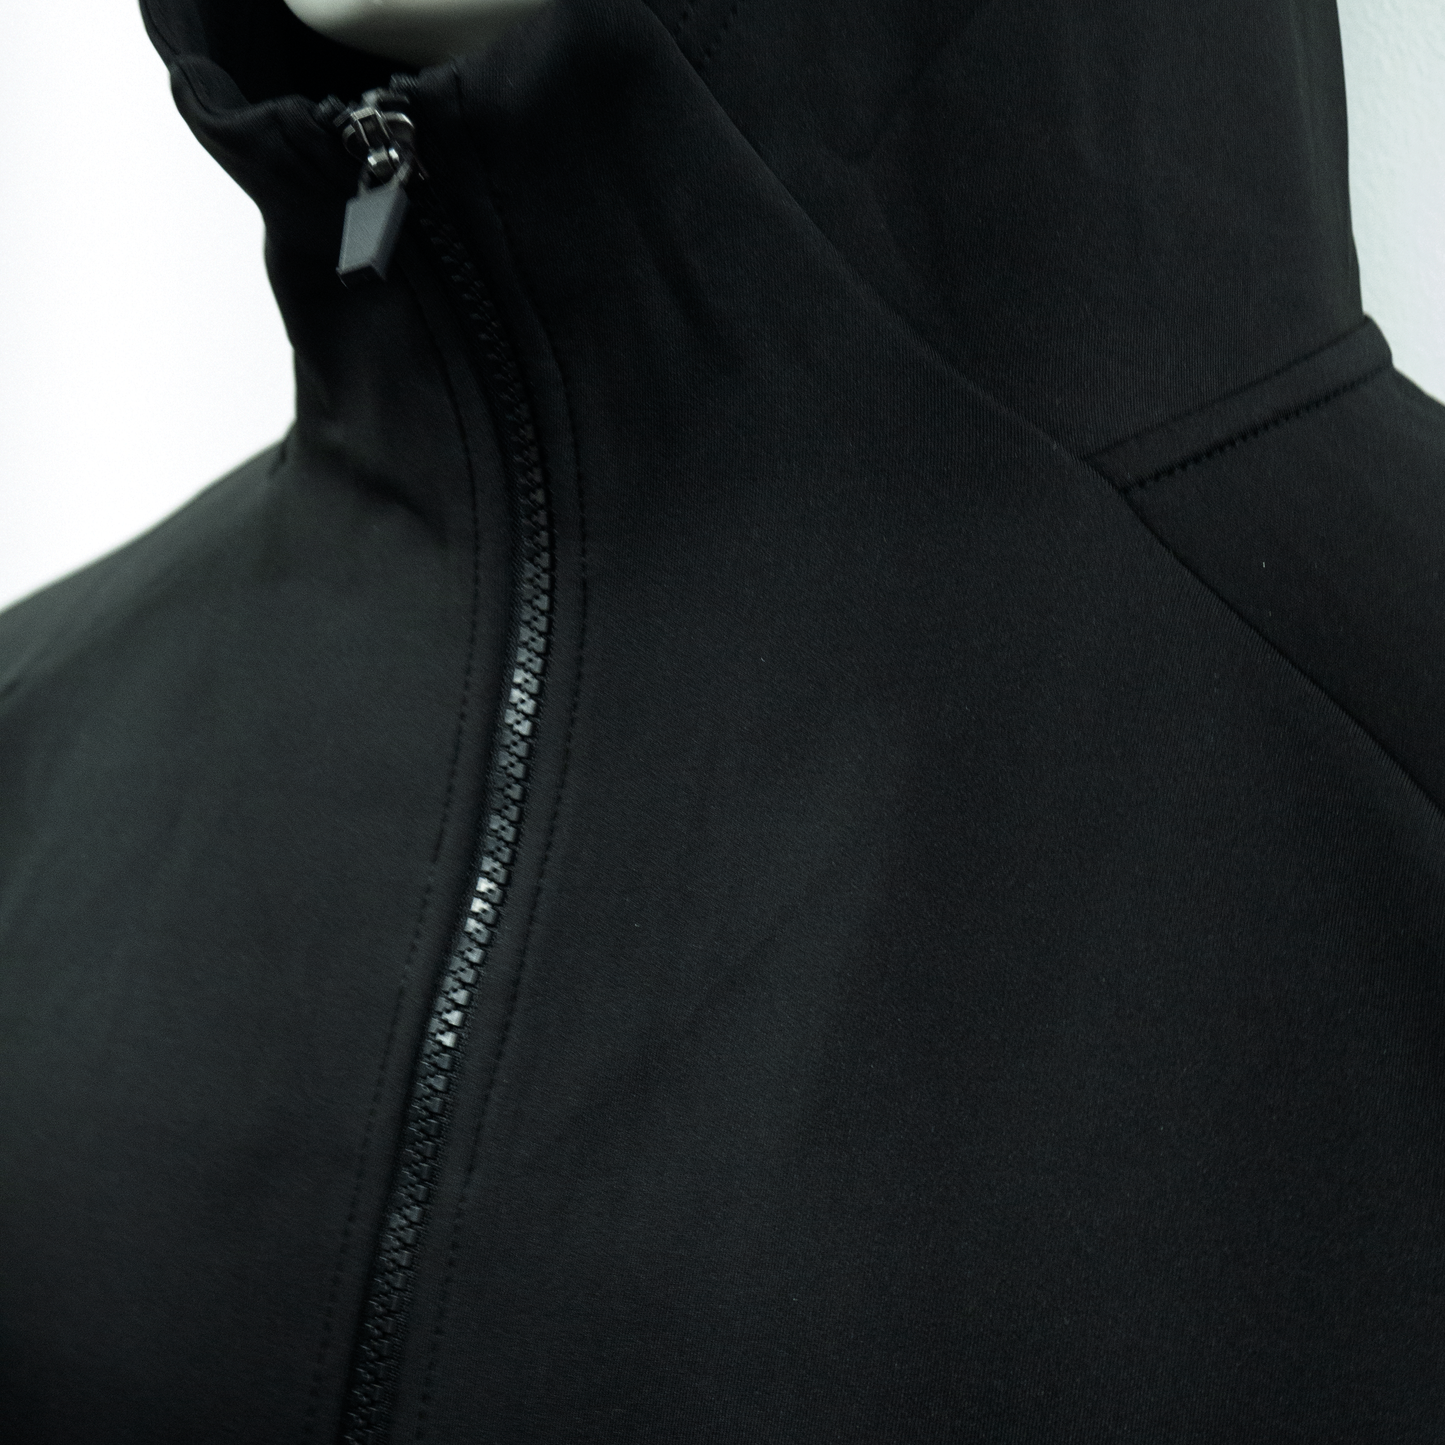 CORE Performance Tech Fleece Softshell Jacket Black